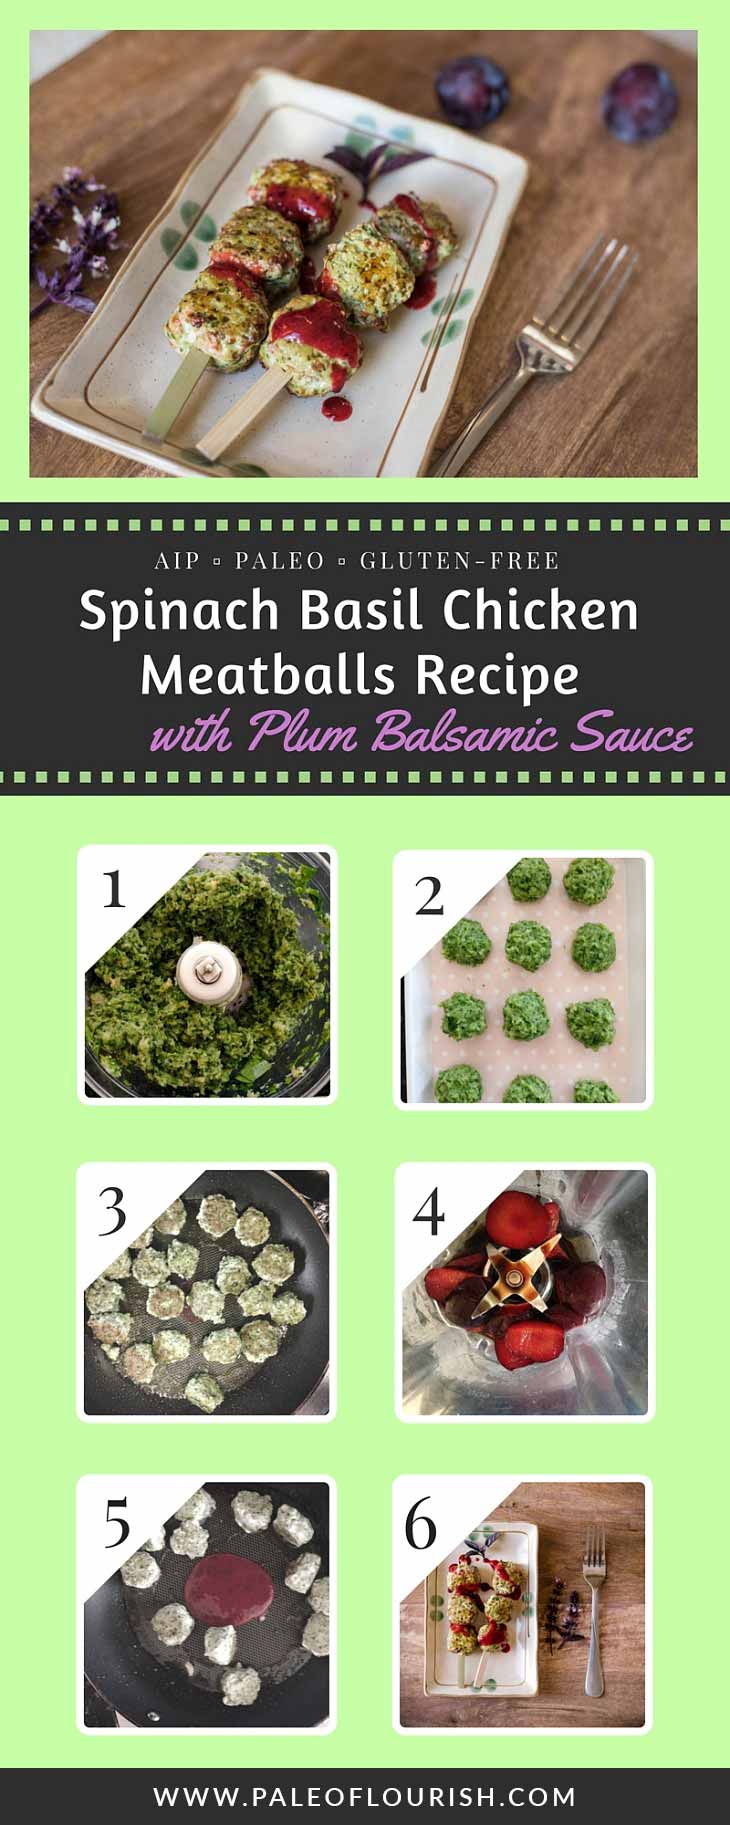 Spinach Basil Chicken Meatballs Recipe With Plum Balsamic Sauce [AIP, Paleo, Gluten-Free] #paleo #recipes #glutenfree https://paleoflourish.com/chicken-spinach-meatballs-recipe-aip-paleo-gf